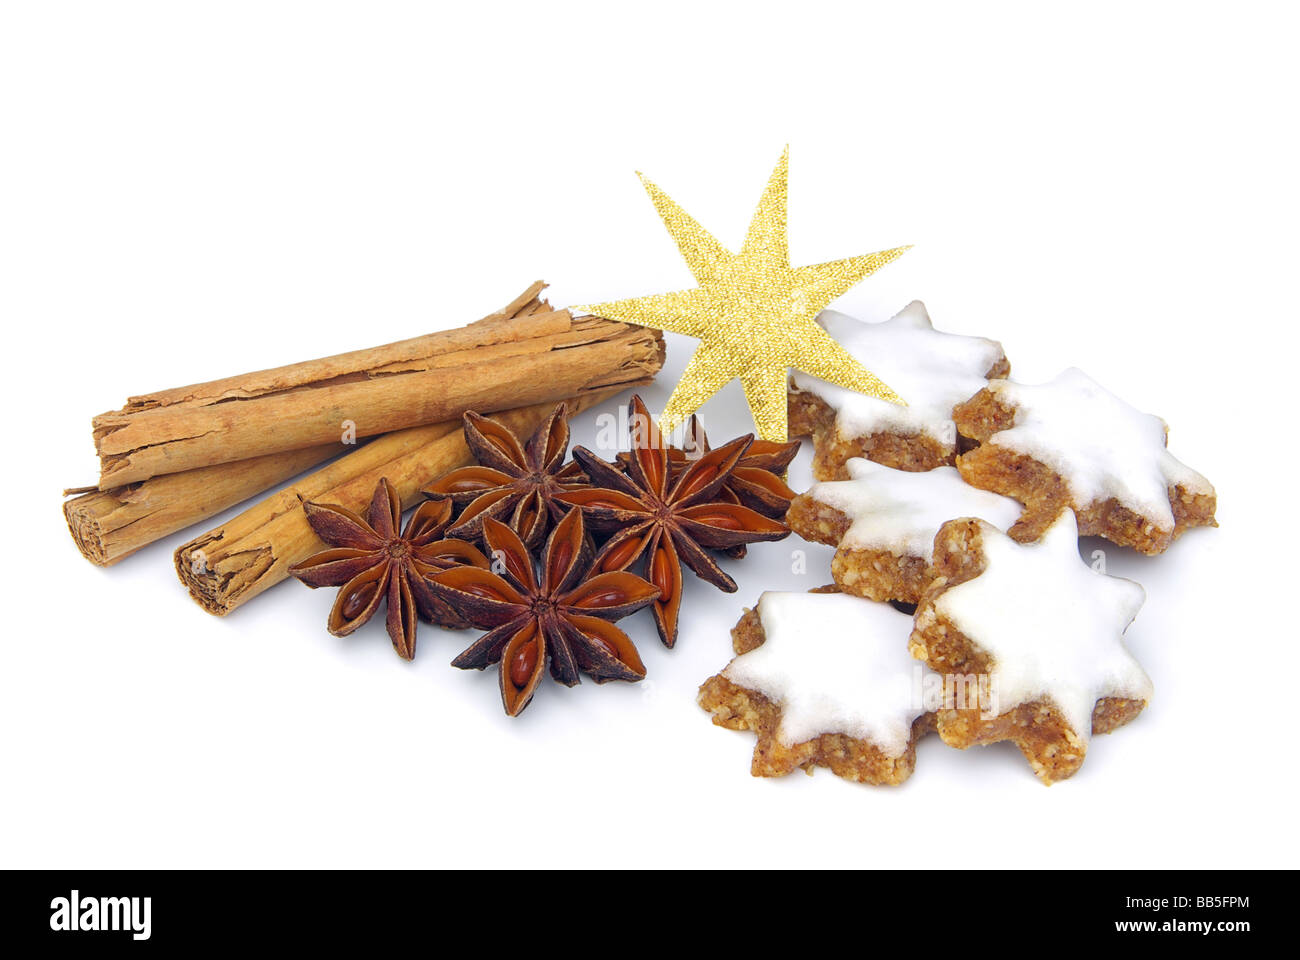 Zimtstern star shaped cinnamon biscuit 04 Stock Photo